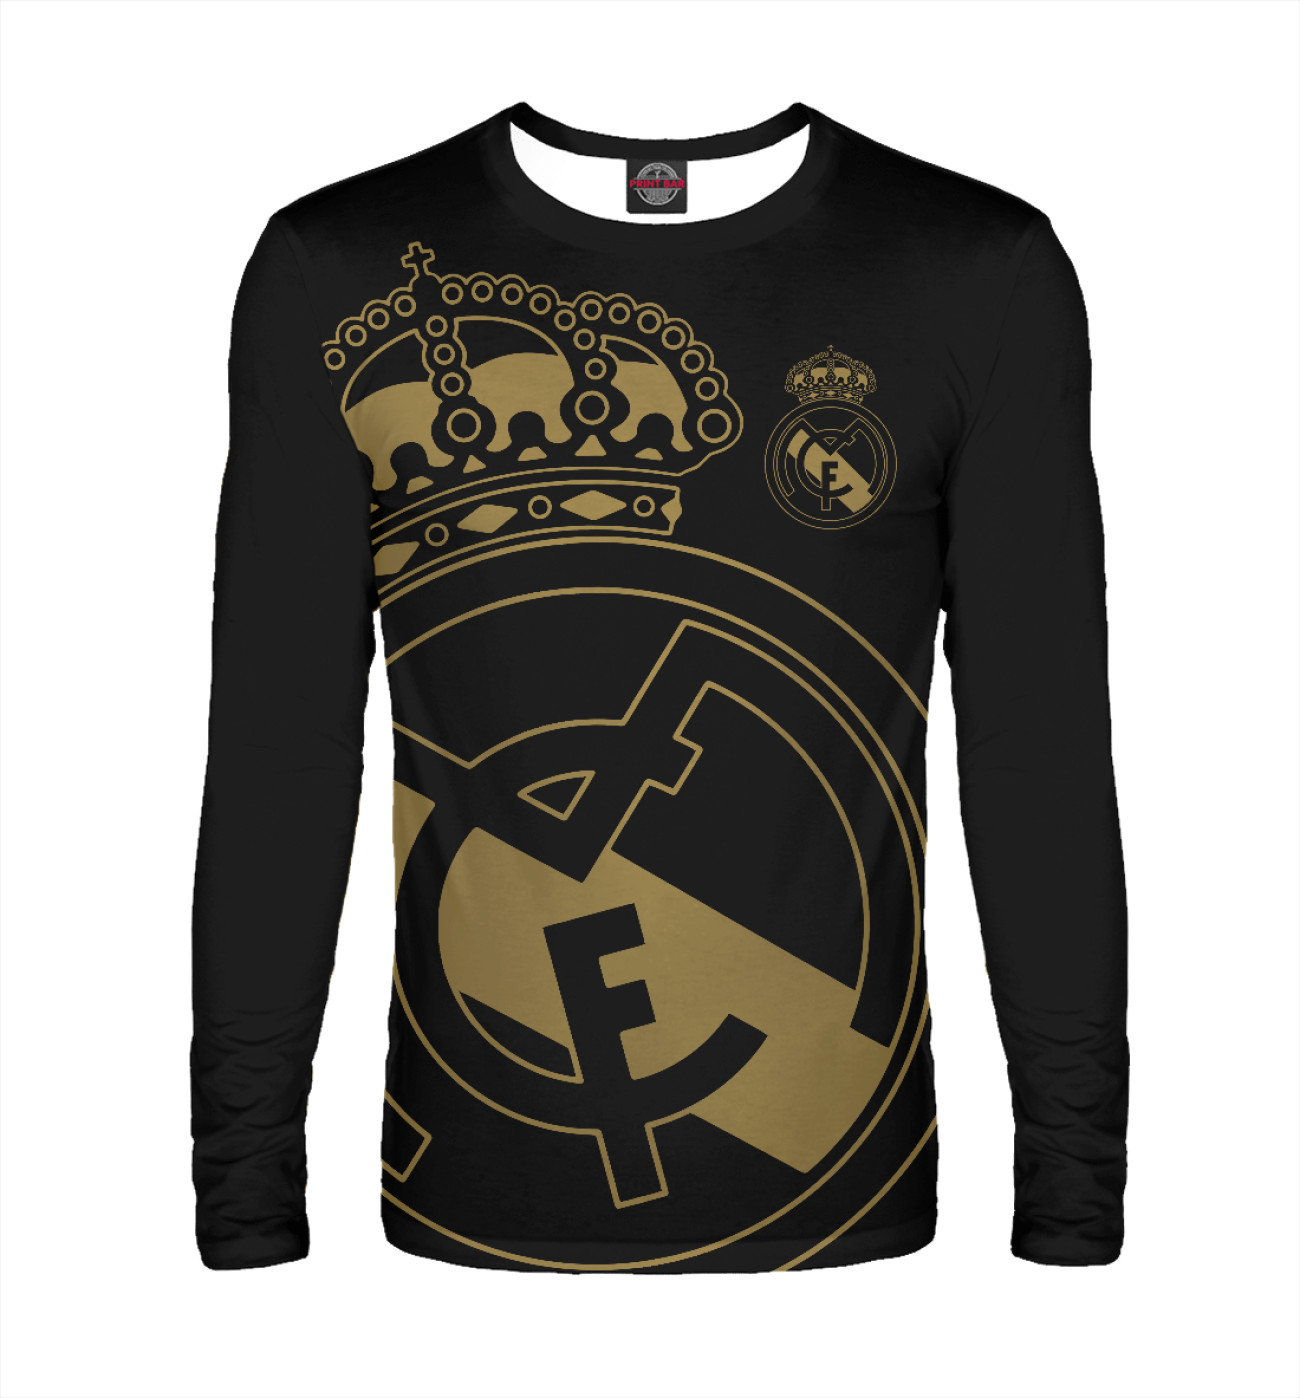 Мужской Лонгслив Real Madrid exclusive gold, артикул: REA-361126-lon-2